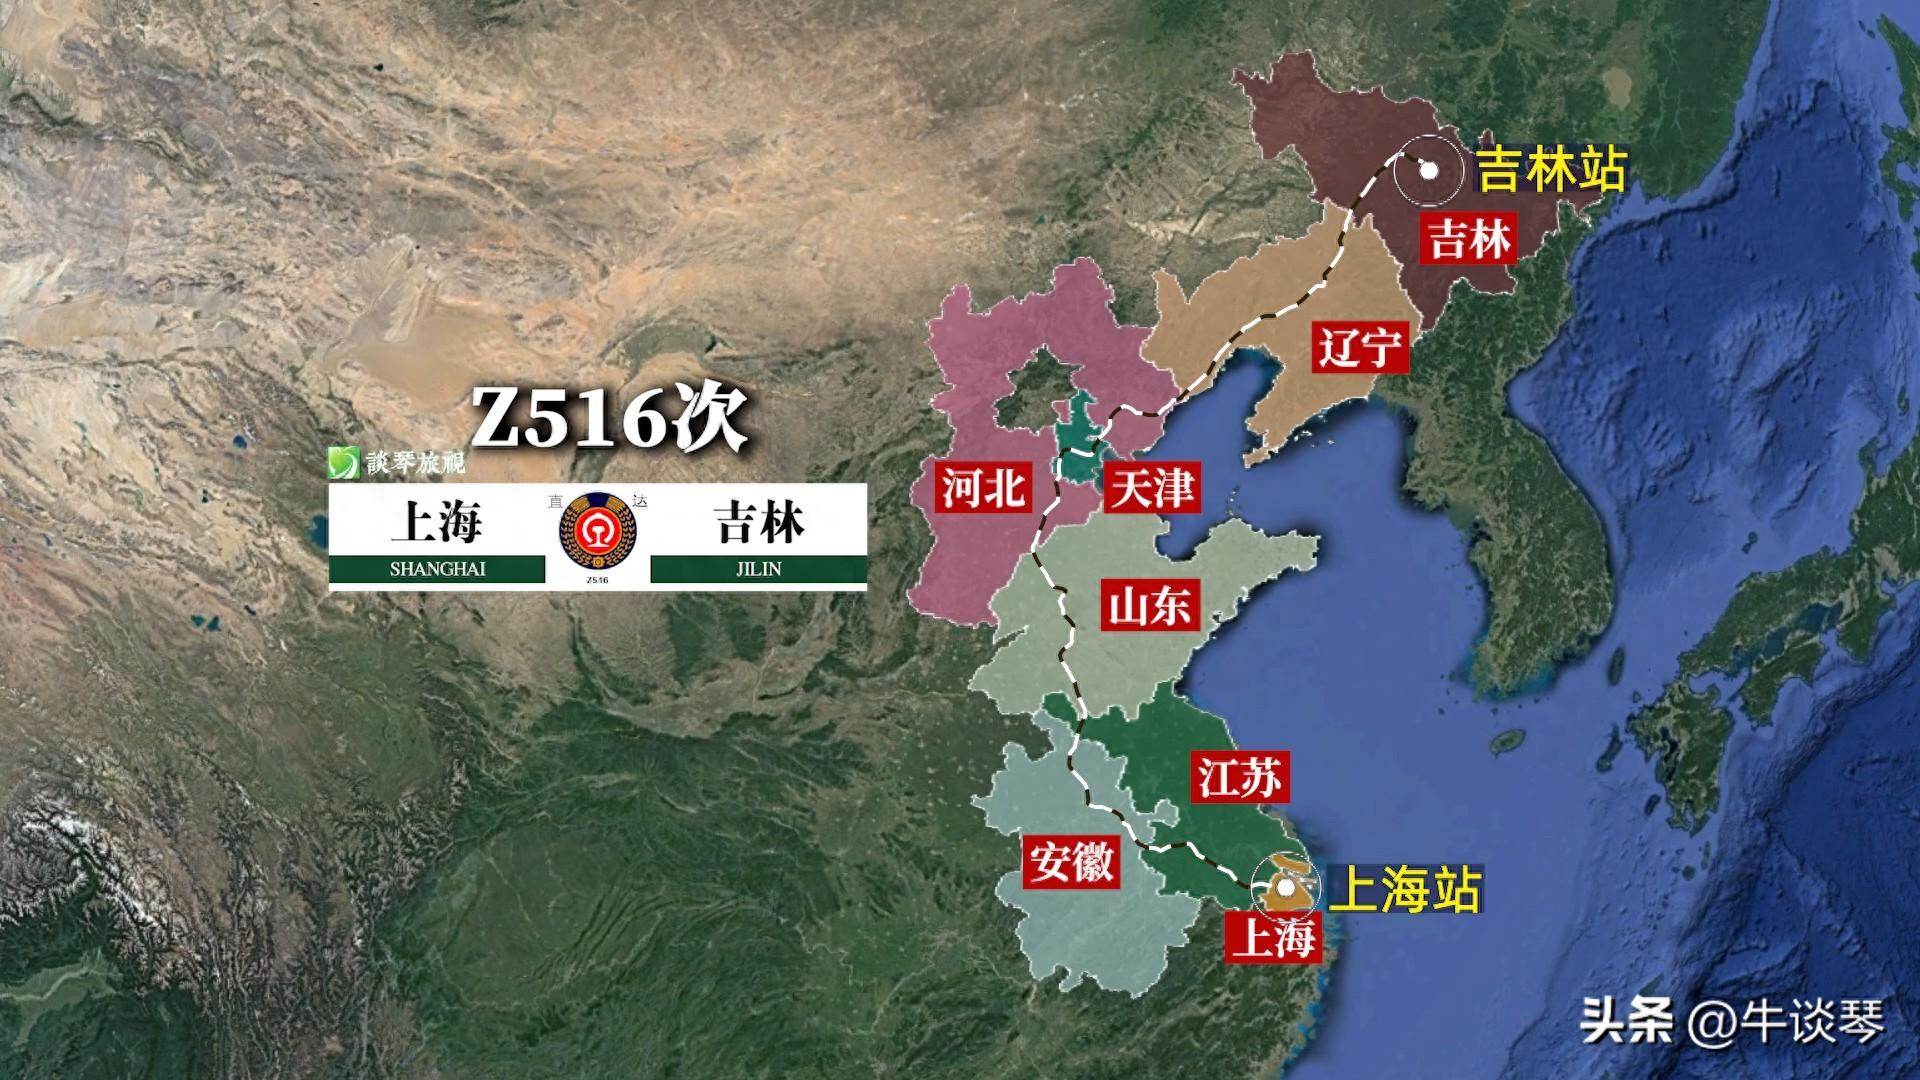 Z516/Z517次列车运行线路图：上海开往吉林，全程2442公里